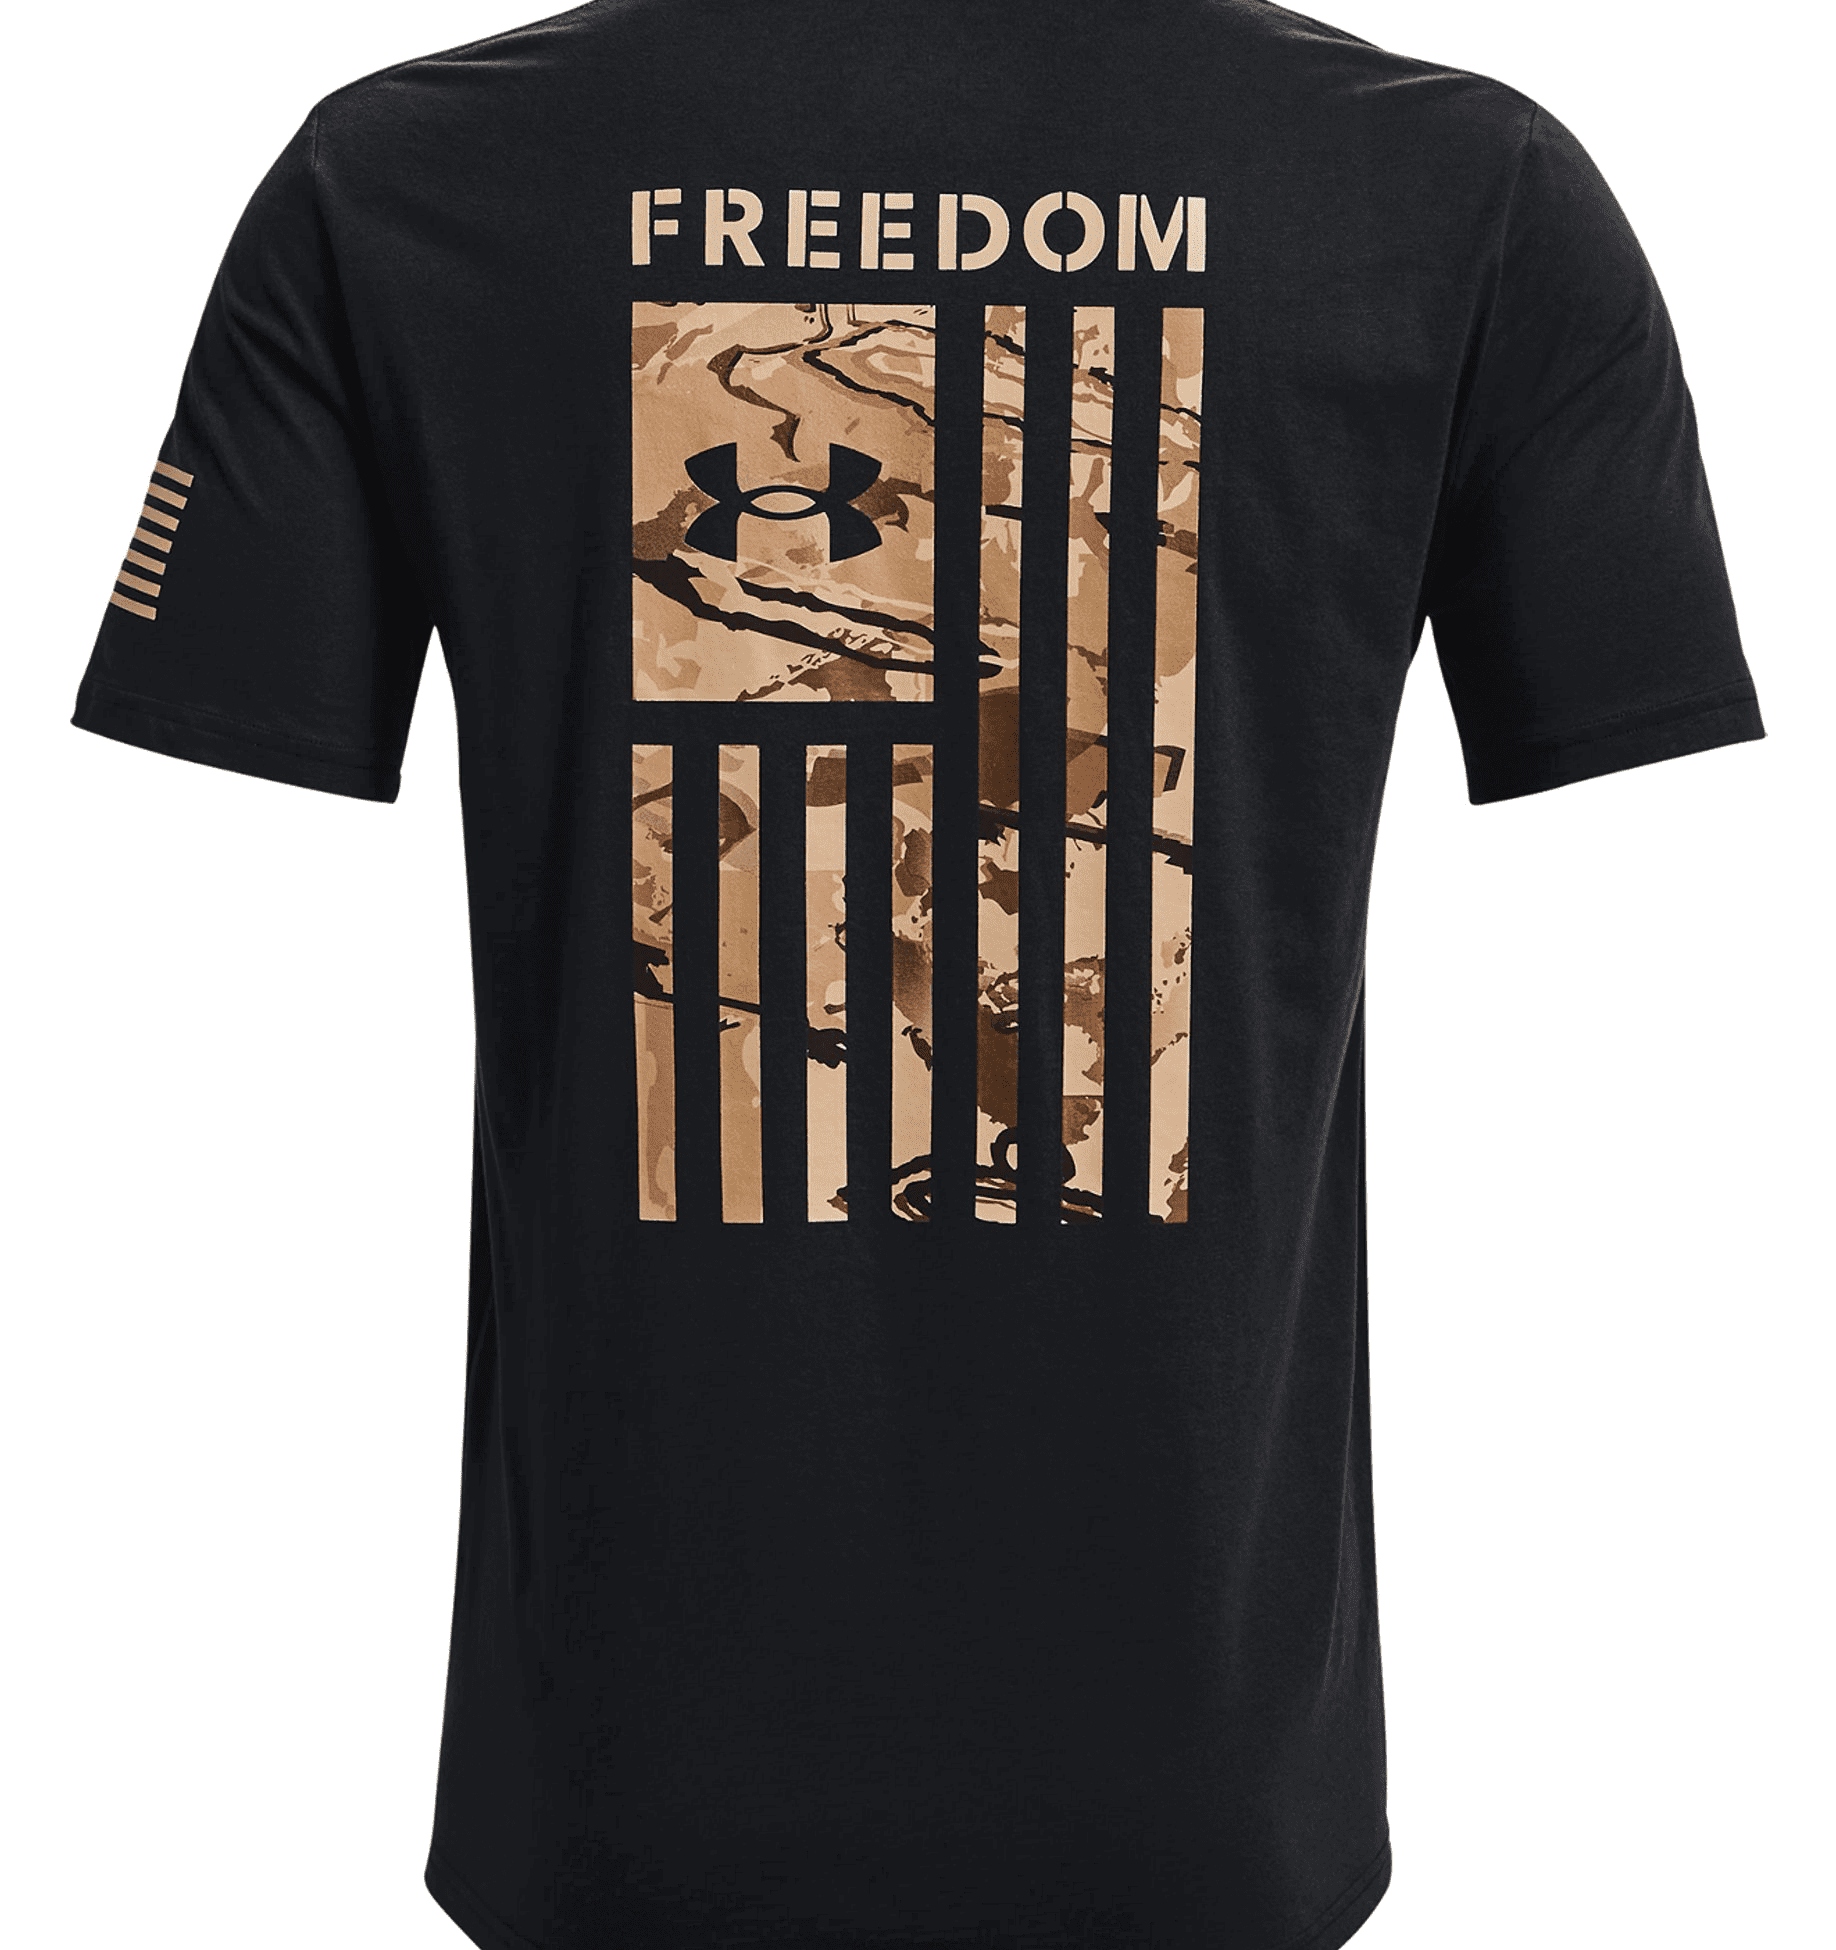 Under Armour UA Freedom Flag Camo T-Shirt 1370816 - Desert Sand, 2XL